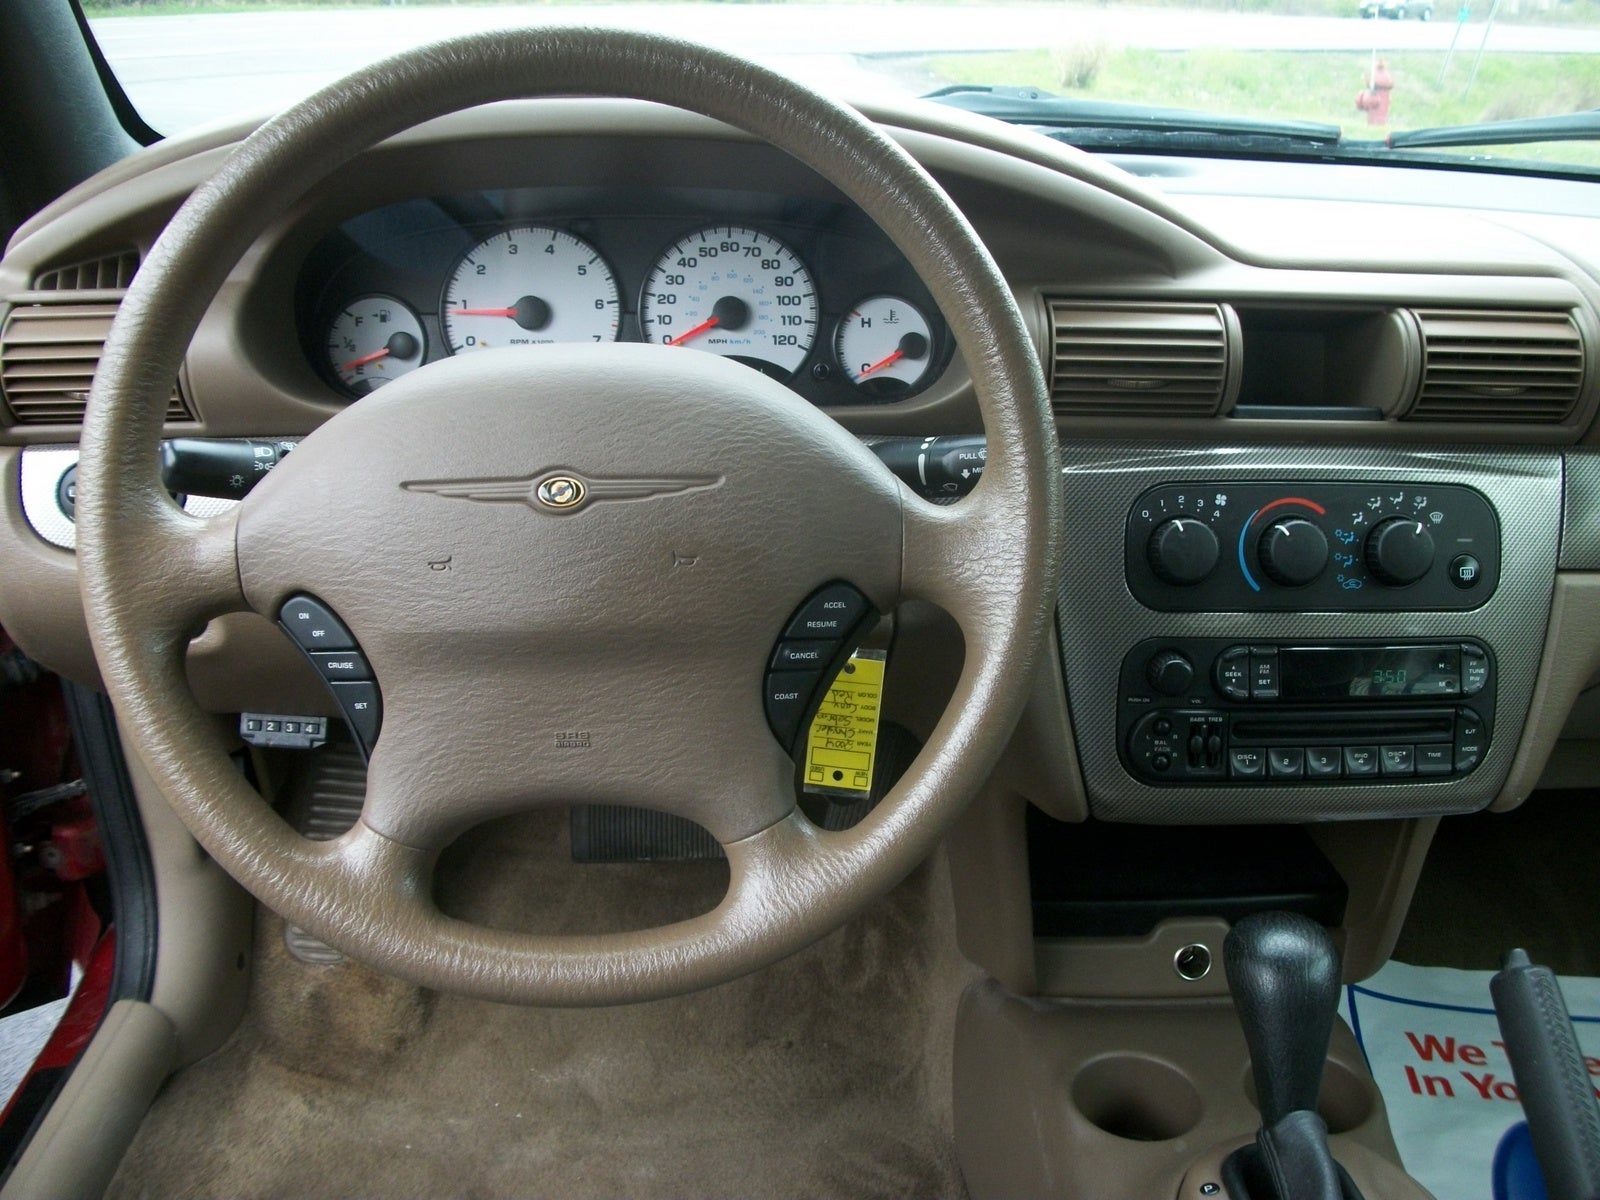 2002 Chrysler sebring convertible electrical problems #4